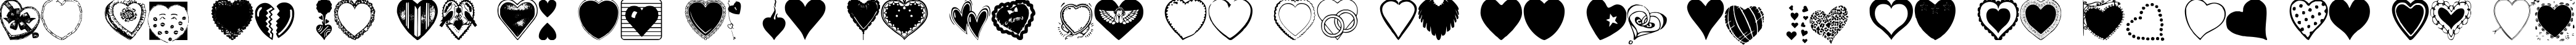 Пример написания английского алфавита шрифтом Hearts Galore